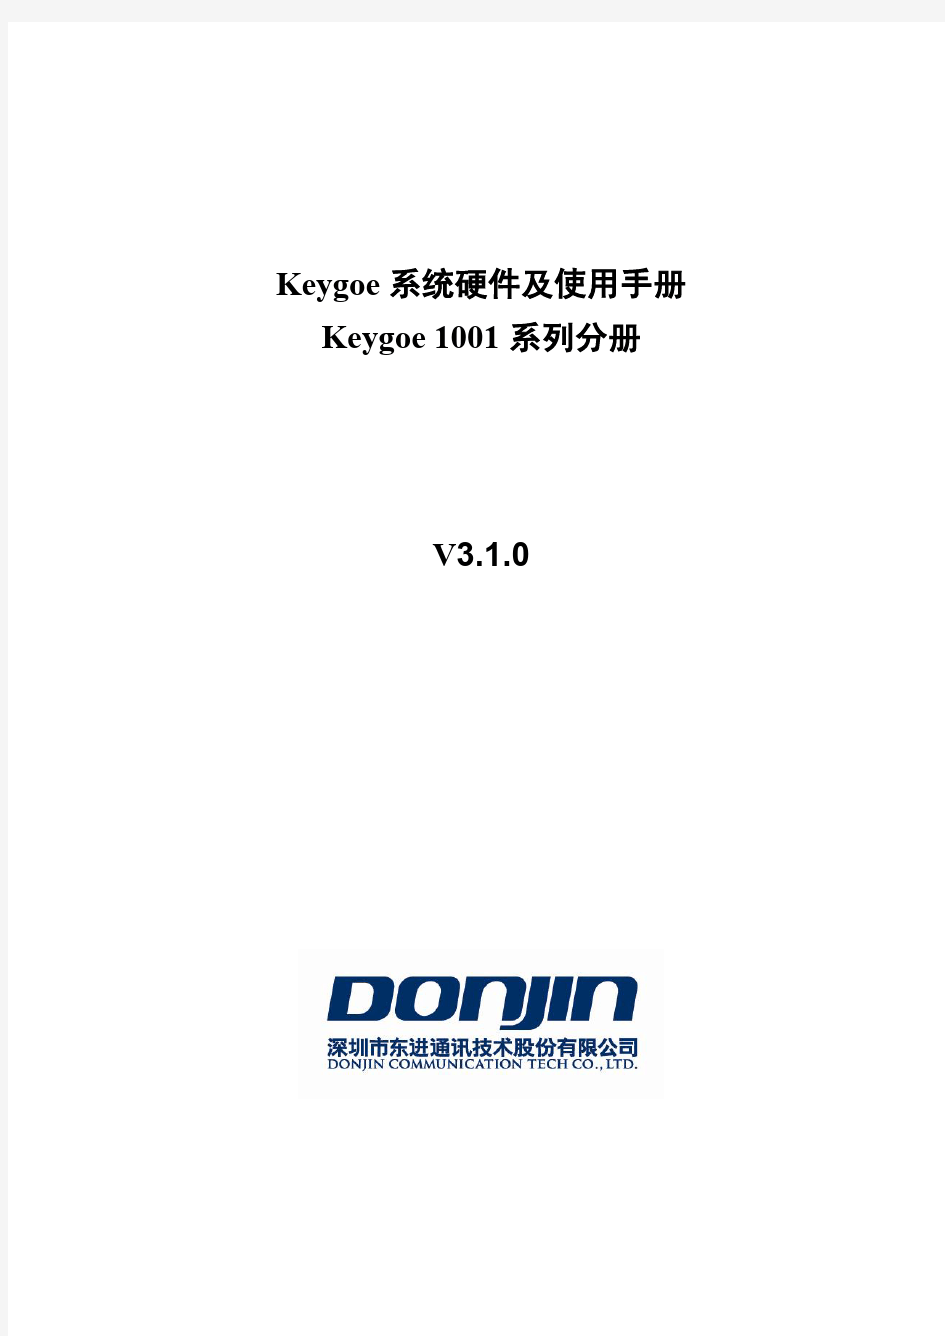 Keygoe系统硬件及使用手册-1001系列分册